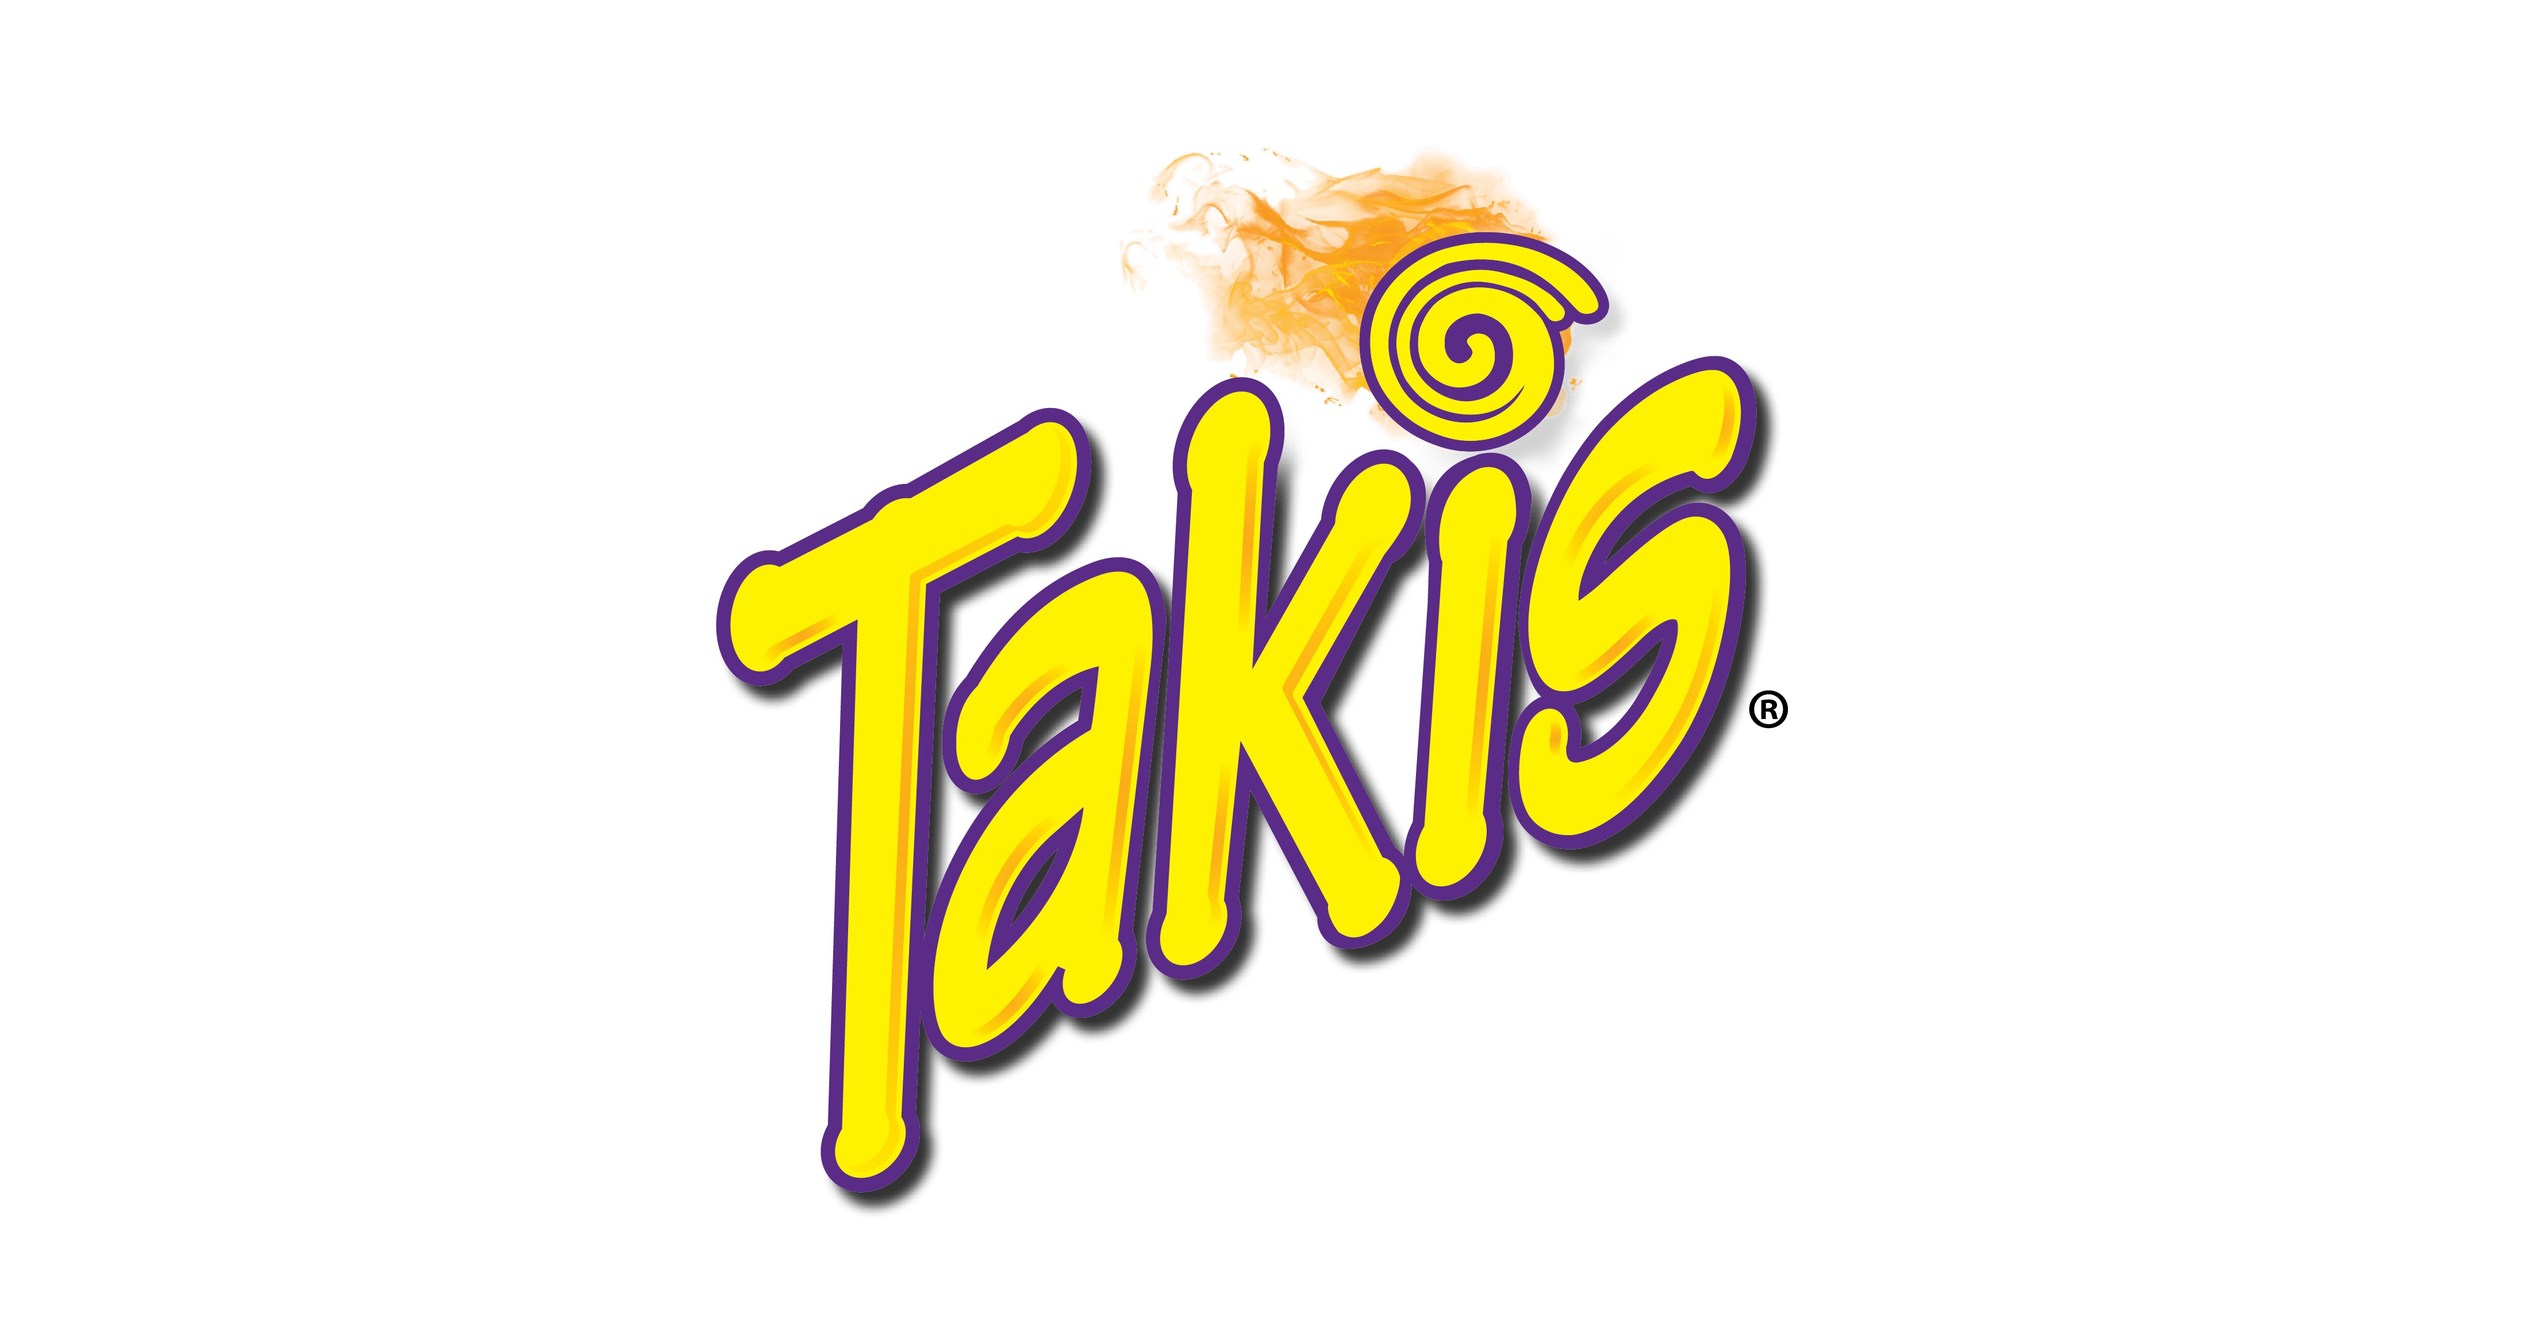 Takis introduces cheesy nacho-flavoured chip line - FoodBev Media